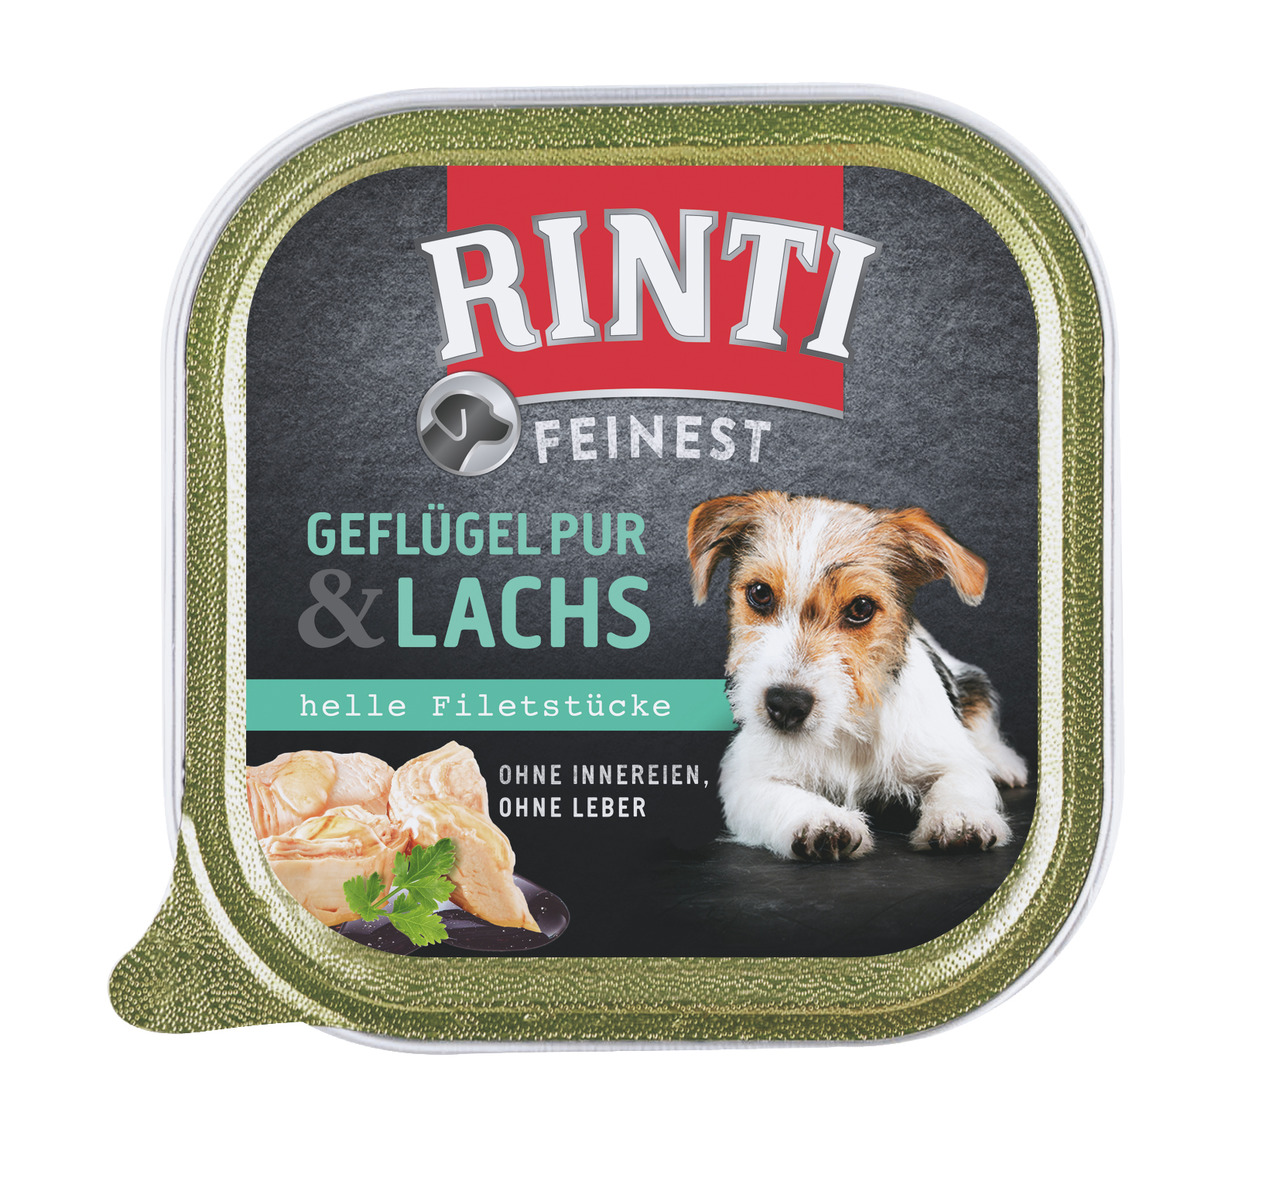 RINTI Feinest Geflügel Pur & Lachs 150g Schale Hundenassfutter